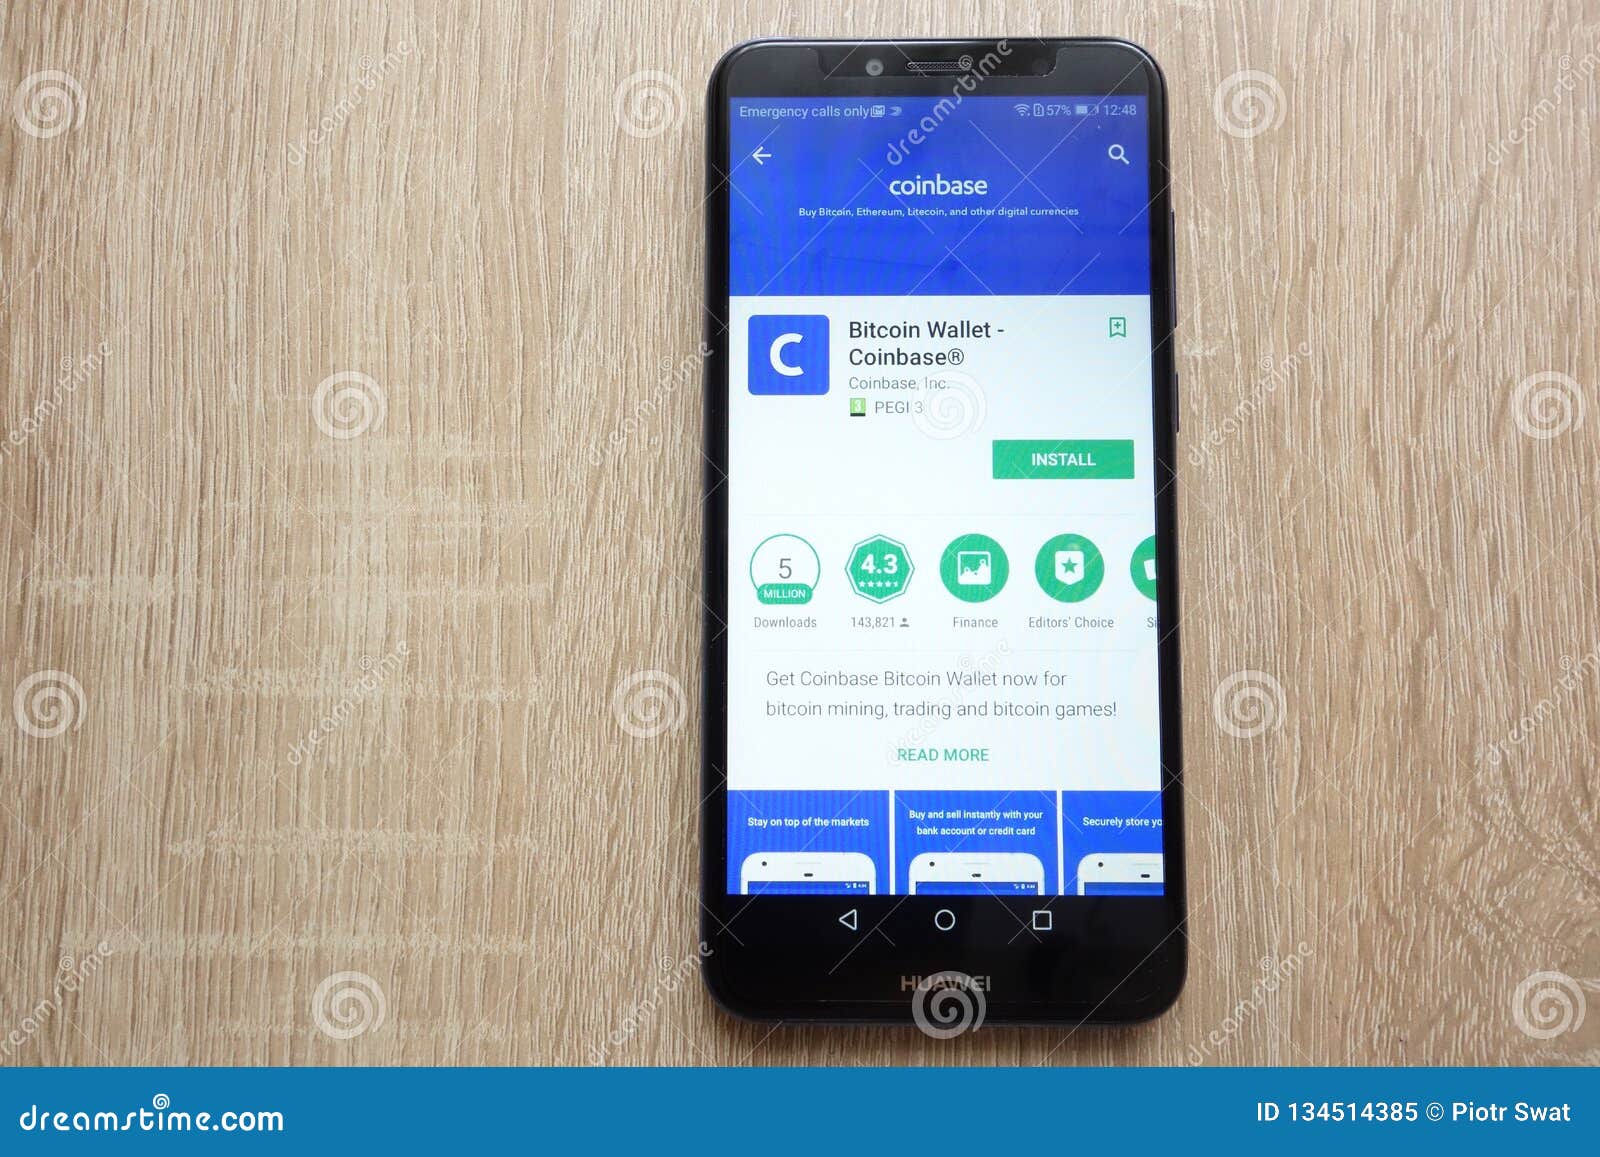 Coinbase Bitcoin Wallet App On Google Play Store Website ...